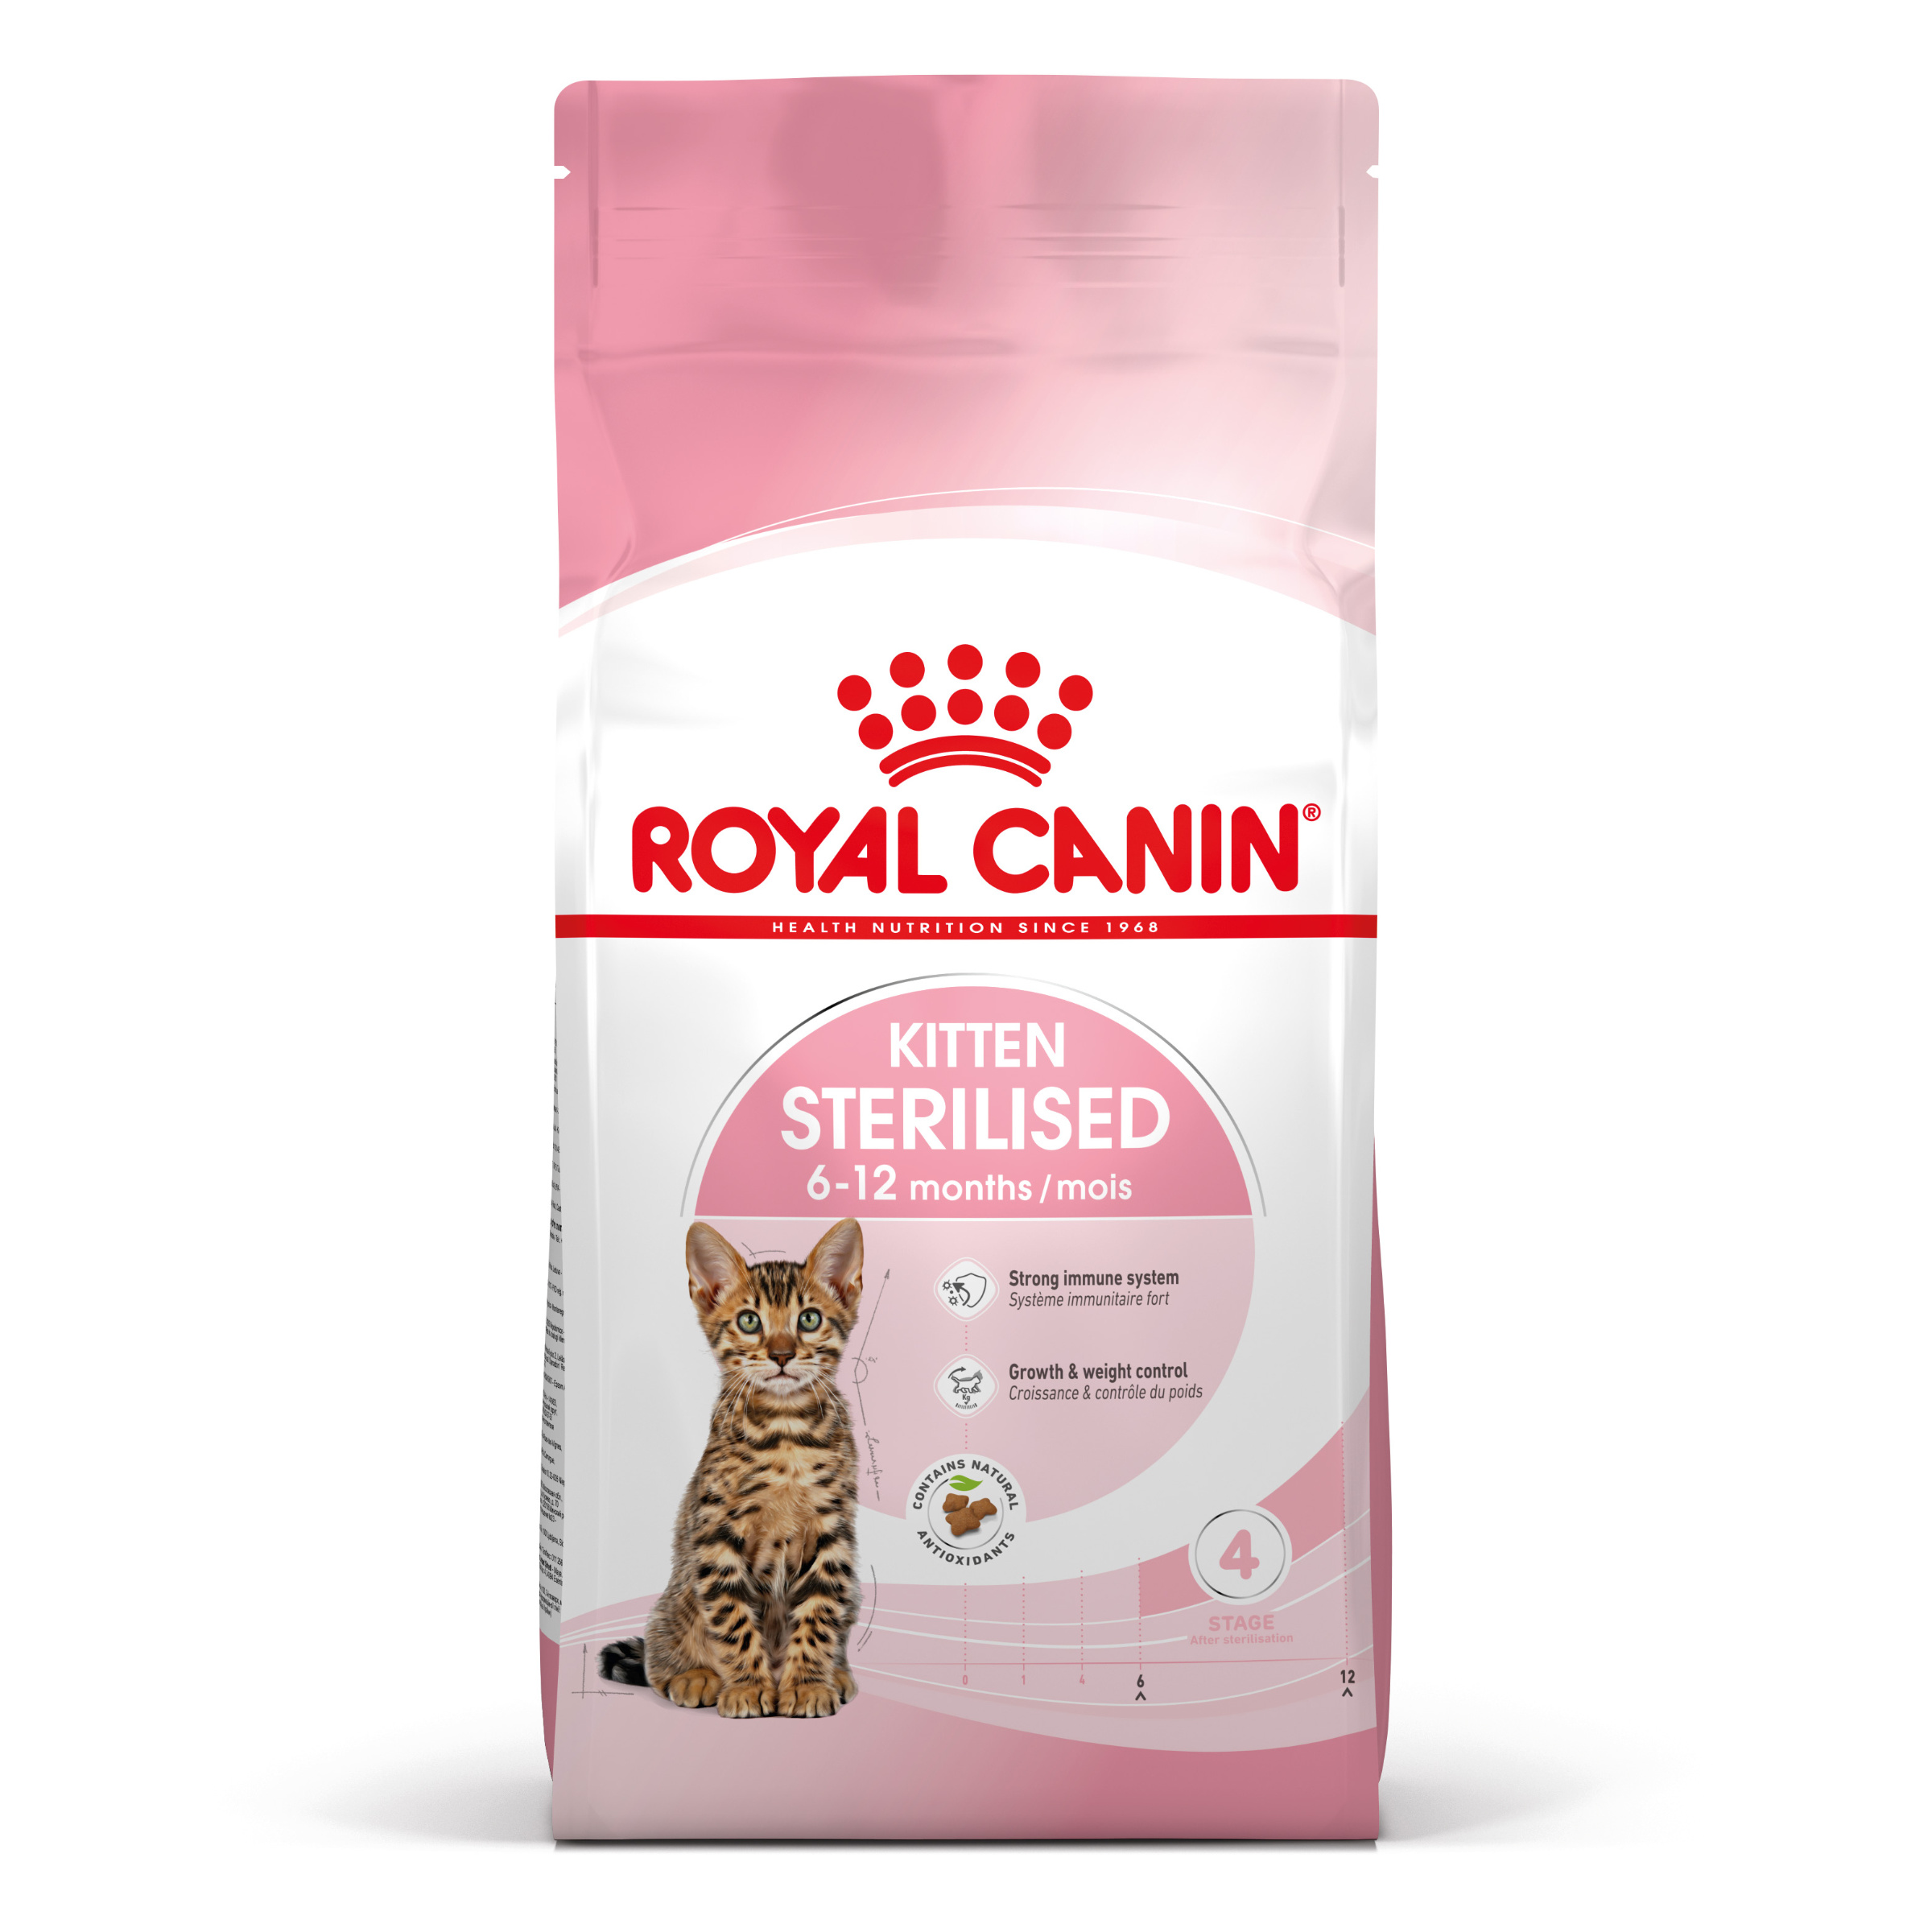 Royal Canin Kitten Sterilised - Kattenvoer voor gesteriliseerde/gecastreerde kittens (6 tot 12 maanden) - 3,5kg